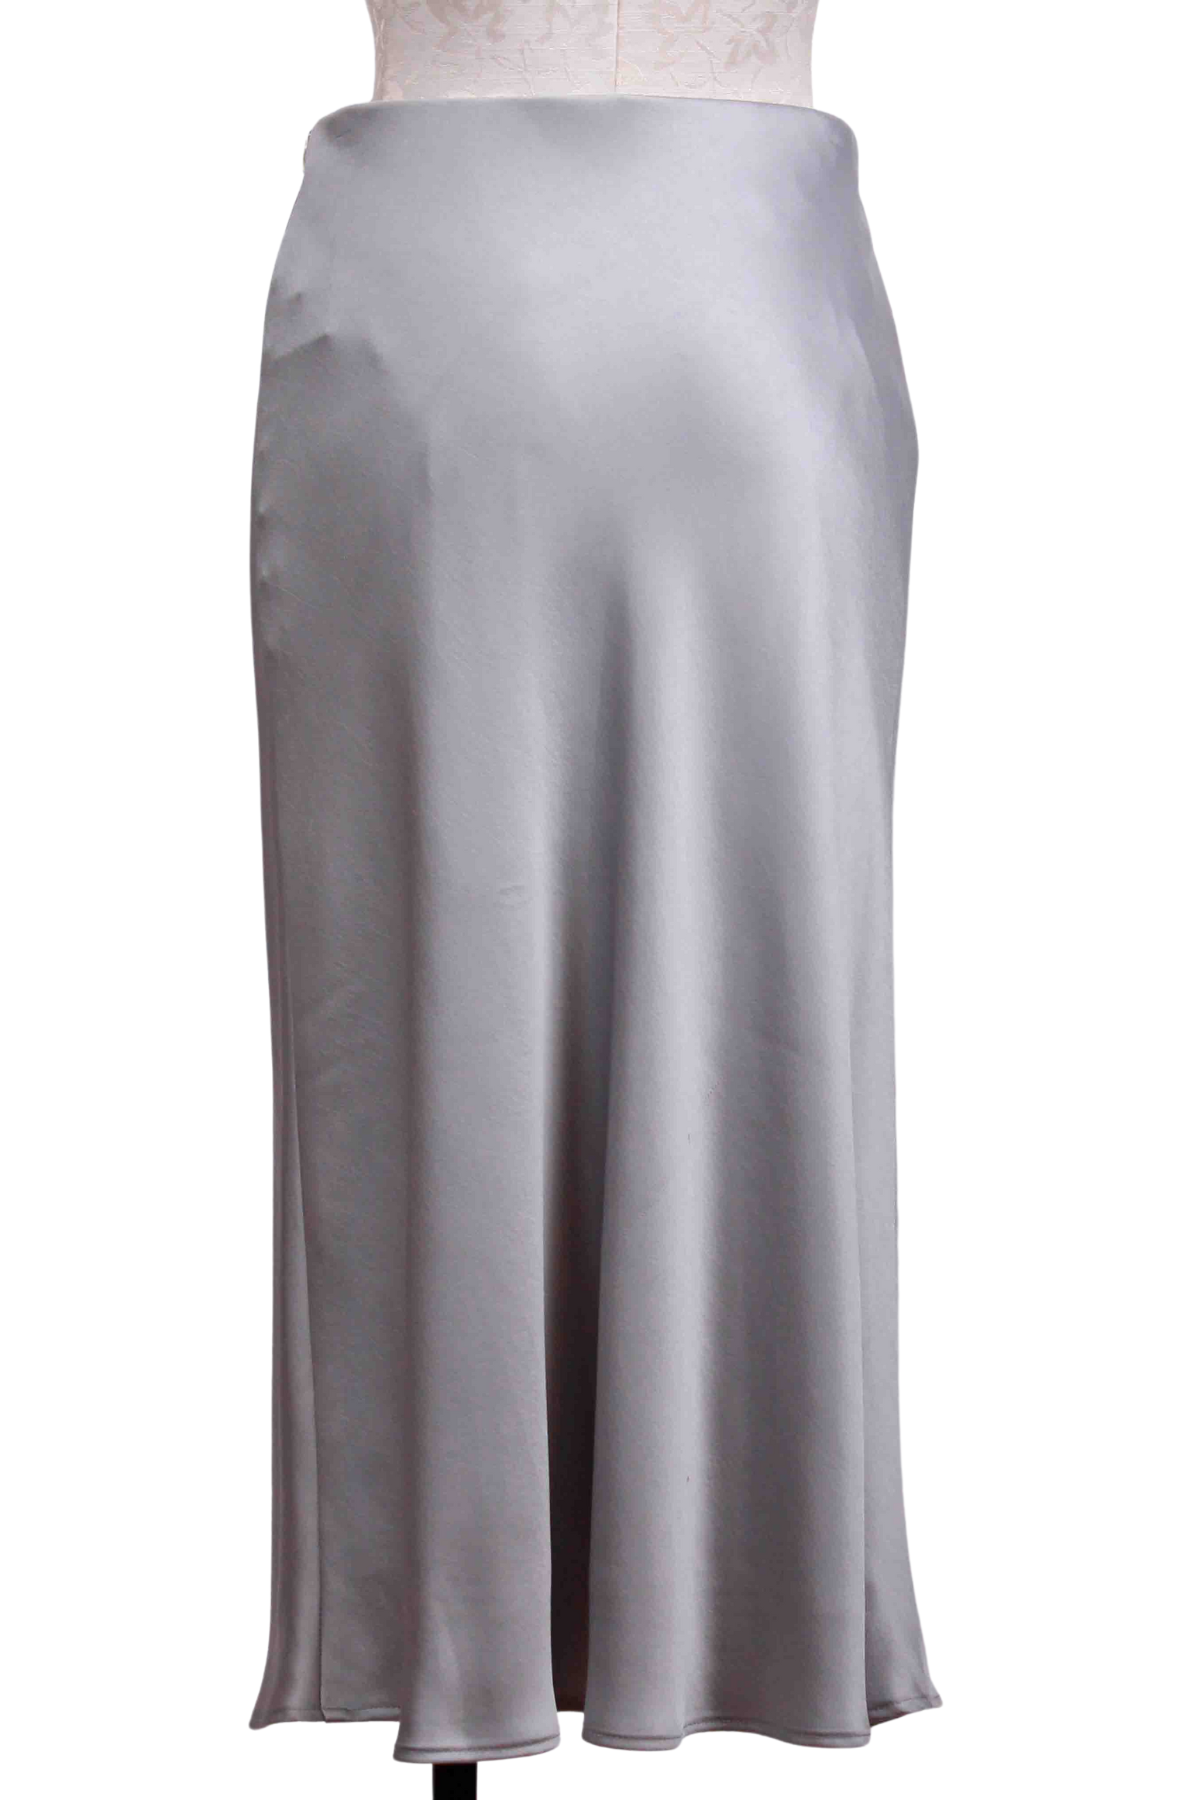 back view of Silver Satin Bias Cut Midi Skirt by Fifteen Twenty